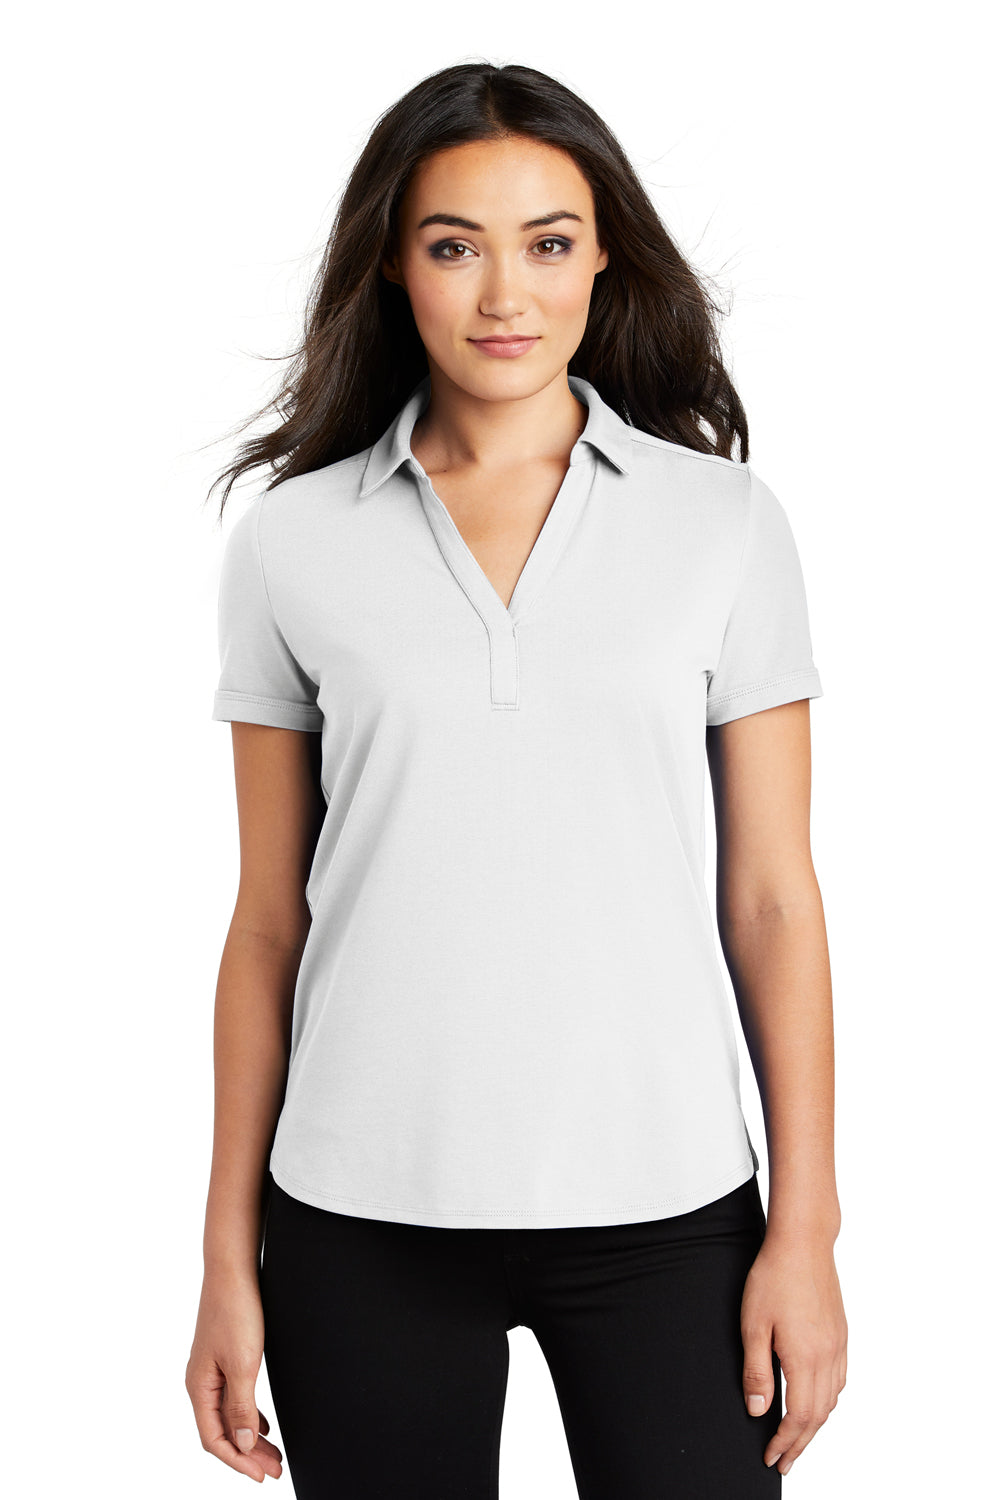 Ogio LOG138 Womens Limit Moisture Wicking Short Sleeve Polo Shirt White Front